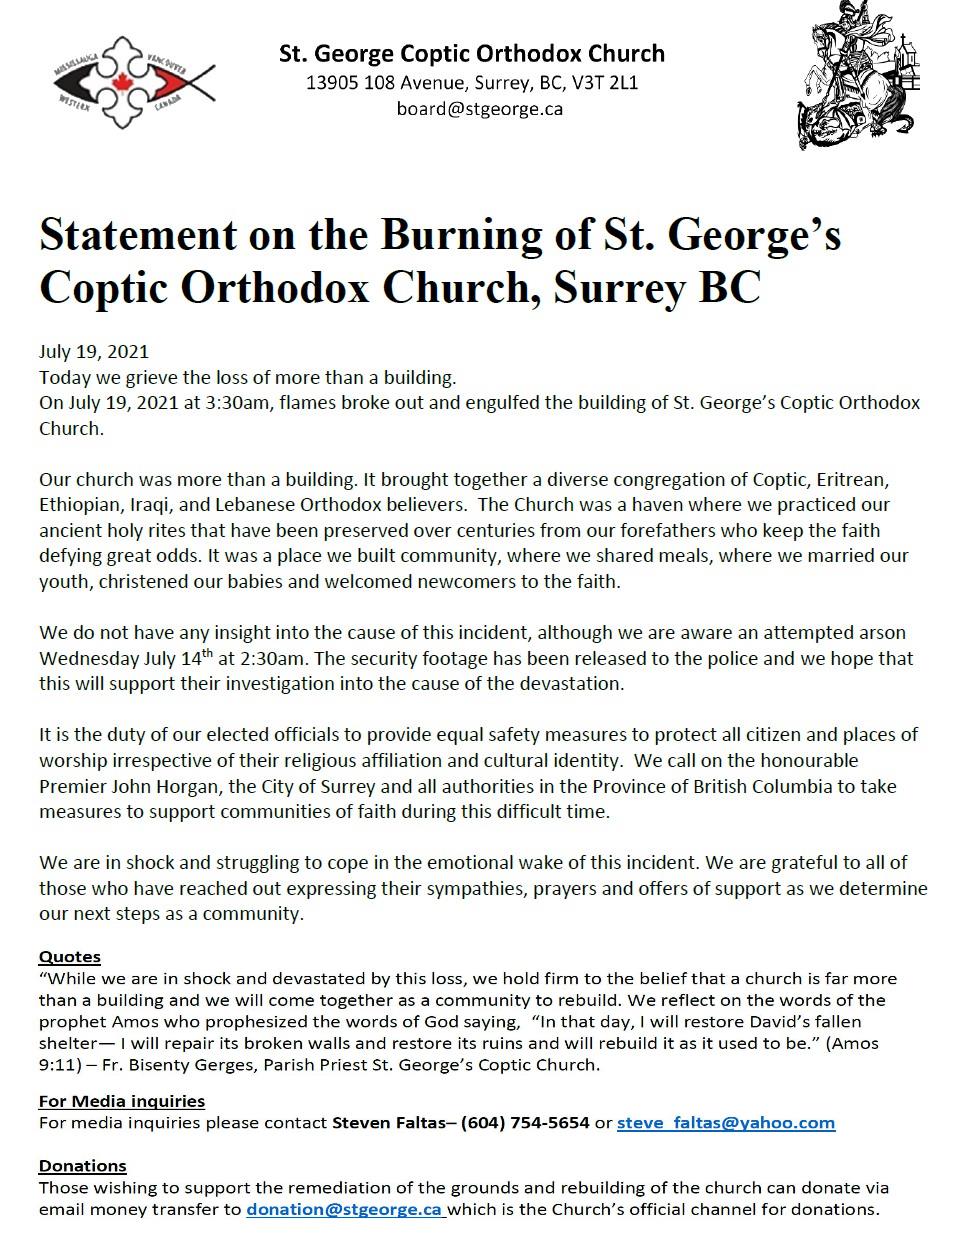 Press release from church board.